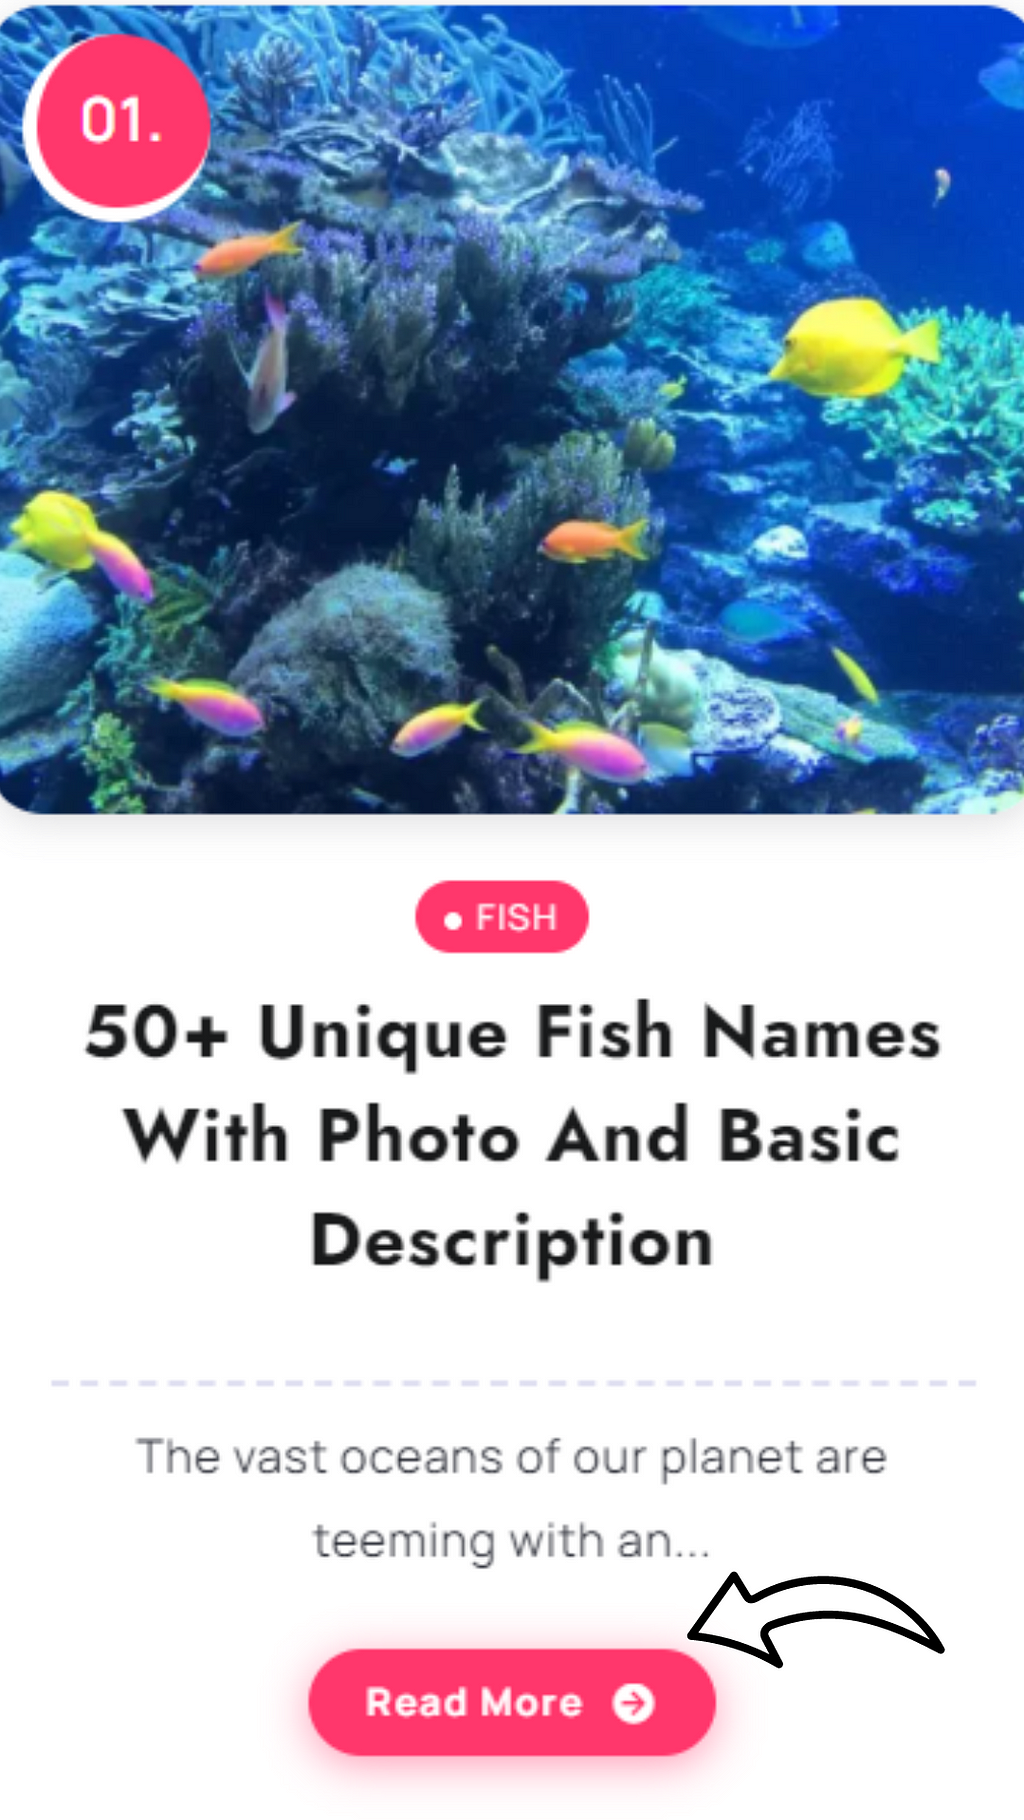 50+ Unique Fish Names With Photo And Basic Description